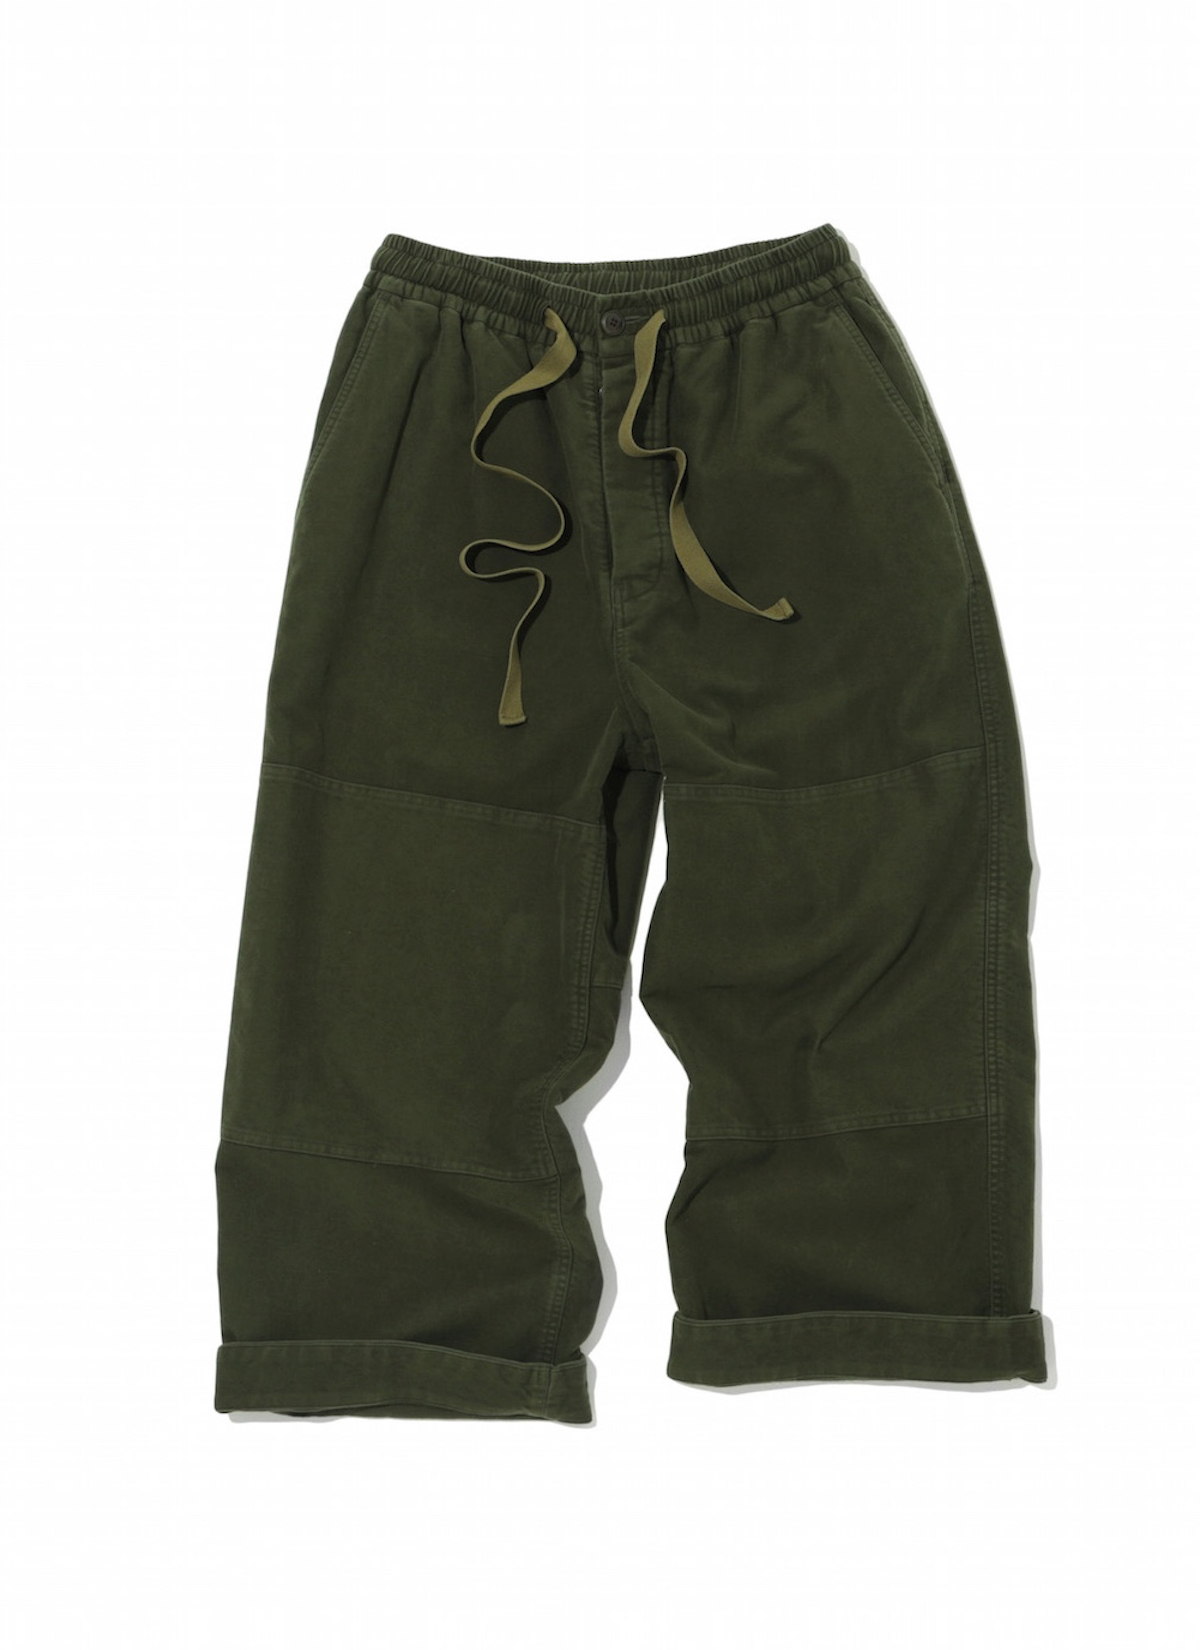 Lcbx Moleskin gardener pants (Tailor made)